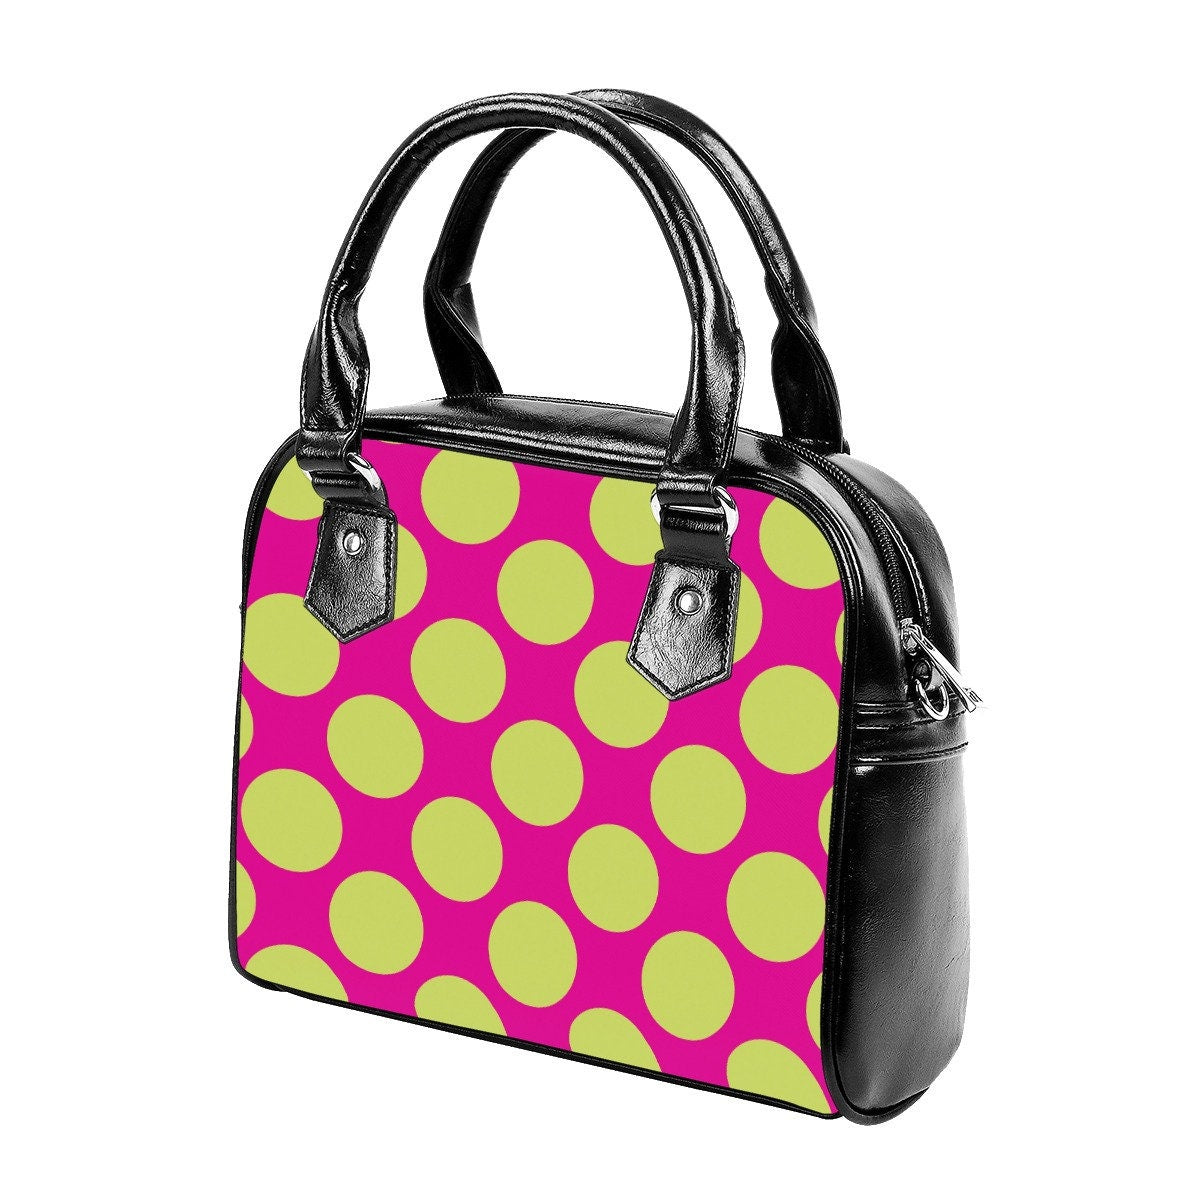 Polka Dot handbag, Pink Green Polka Dot Handbag,Retro handbags,Retro Handbags for women, Polka Dot Purse, Vintage Style Handbag, Womens bags